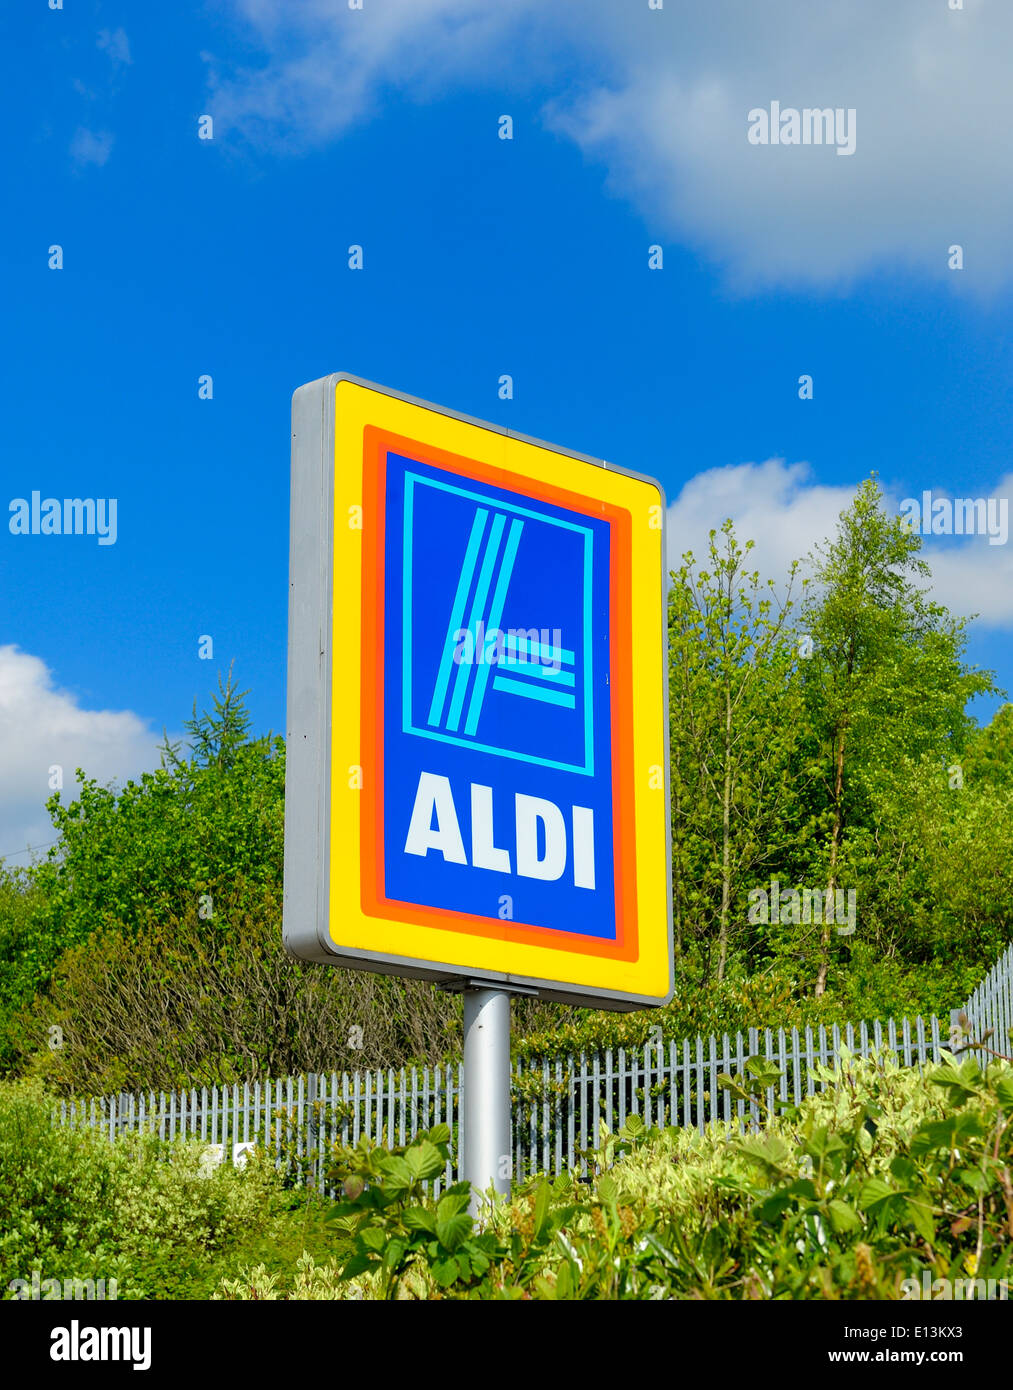 Aldi budget food supermarket chain trading sign uk Stock Photo